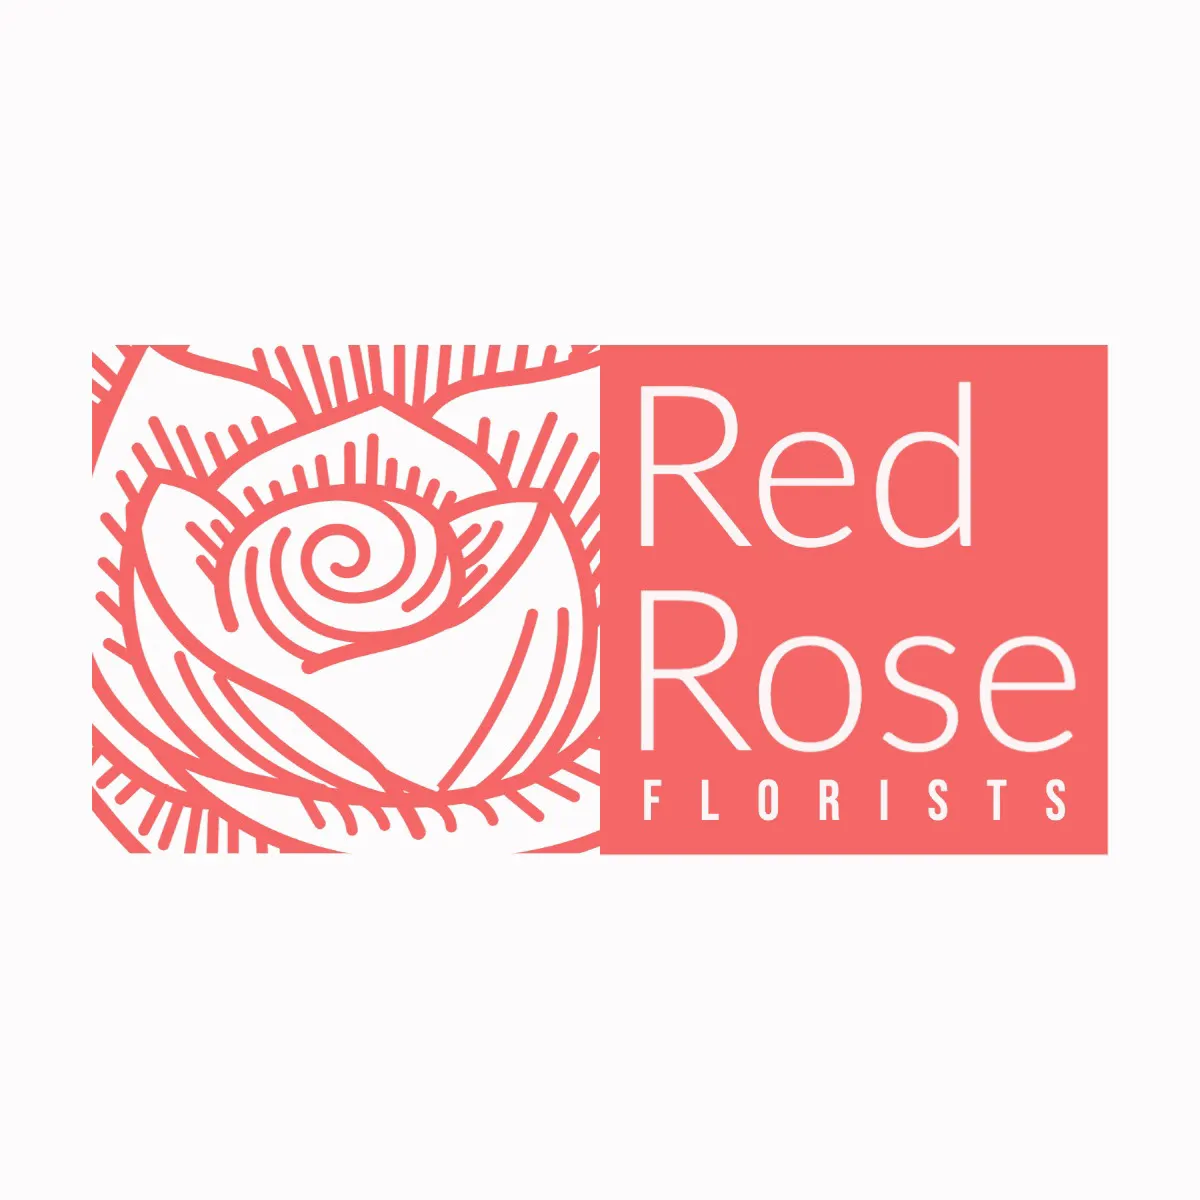 Red & White Rose Florist Logo